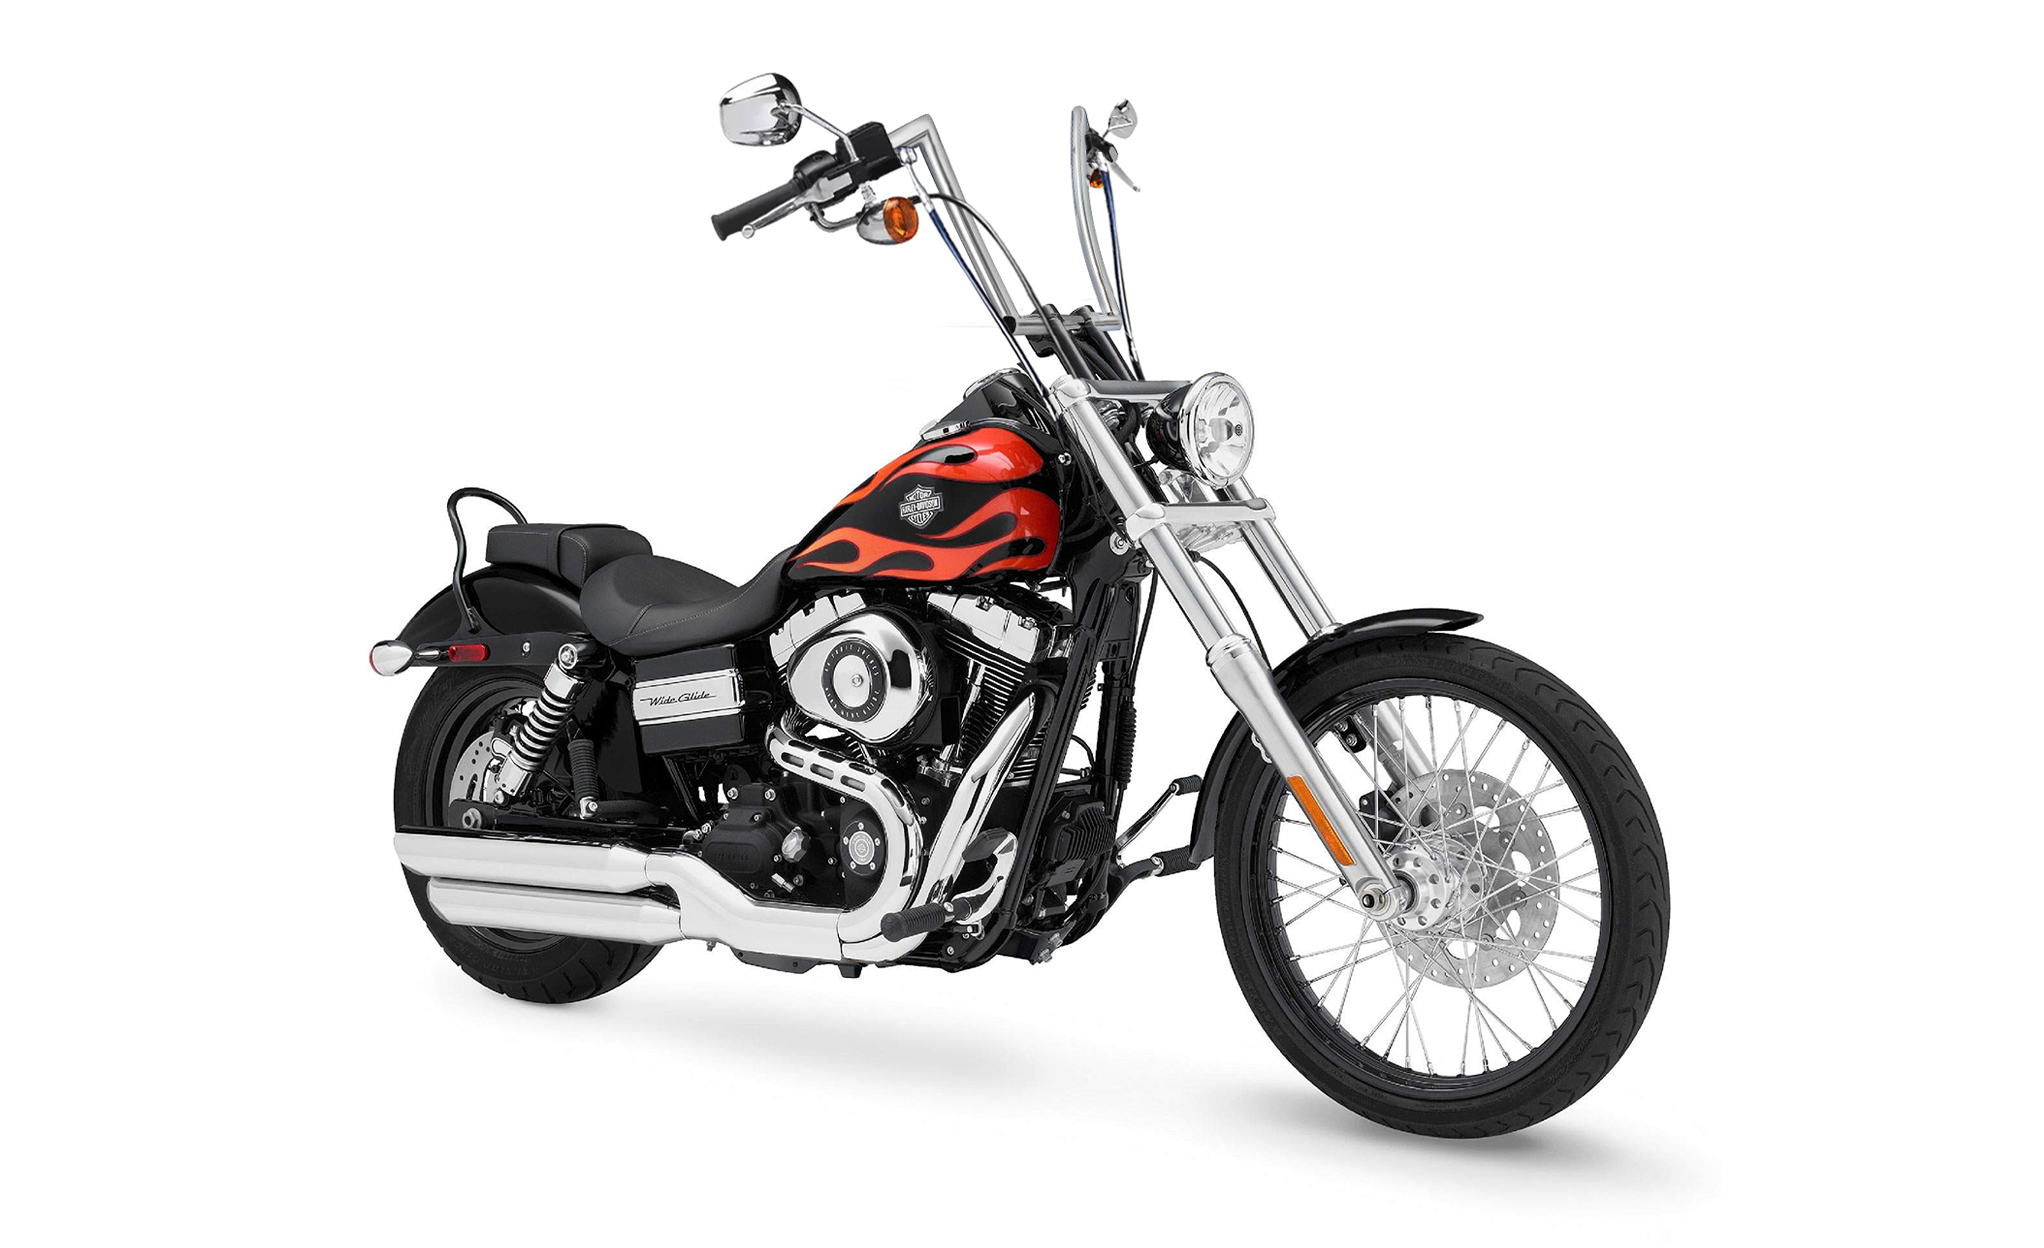 Viking Iron Born 9" Handlebar for Harley Dyna Wide Glide FXDWG Chrome Bag on Bike View @expand